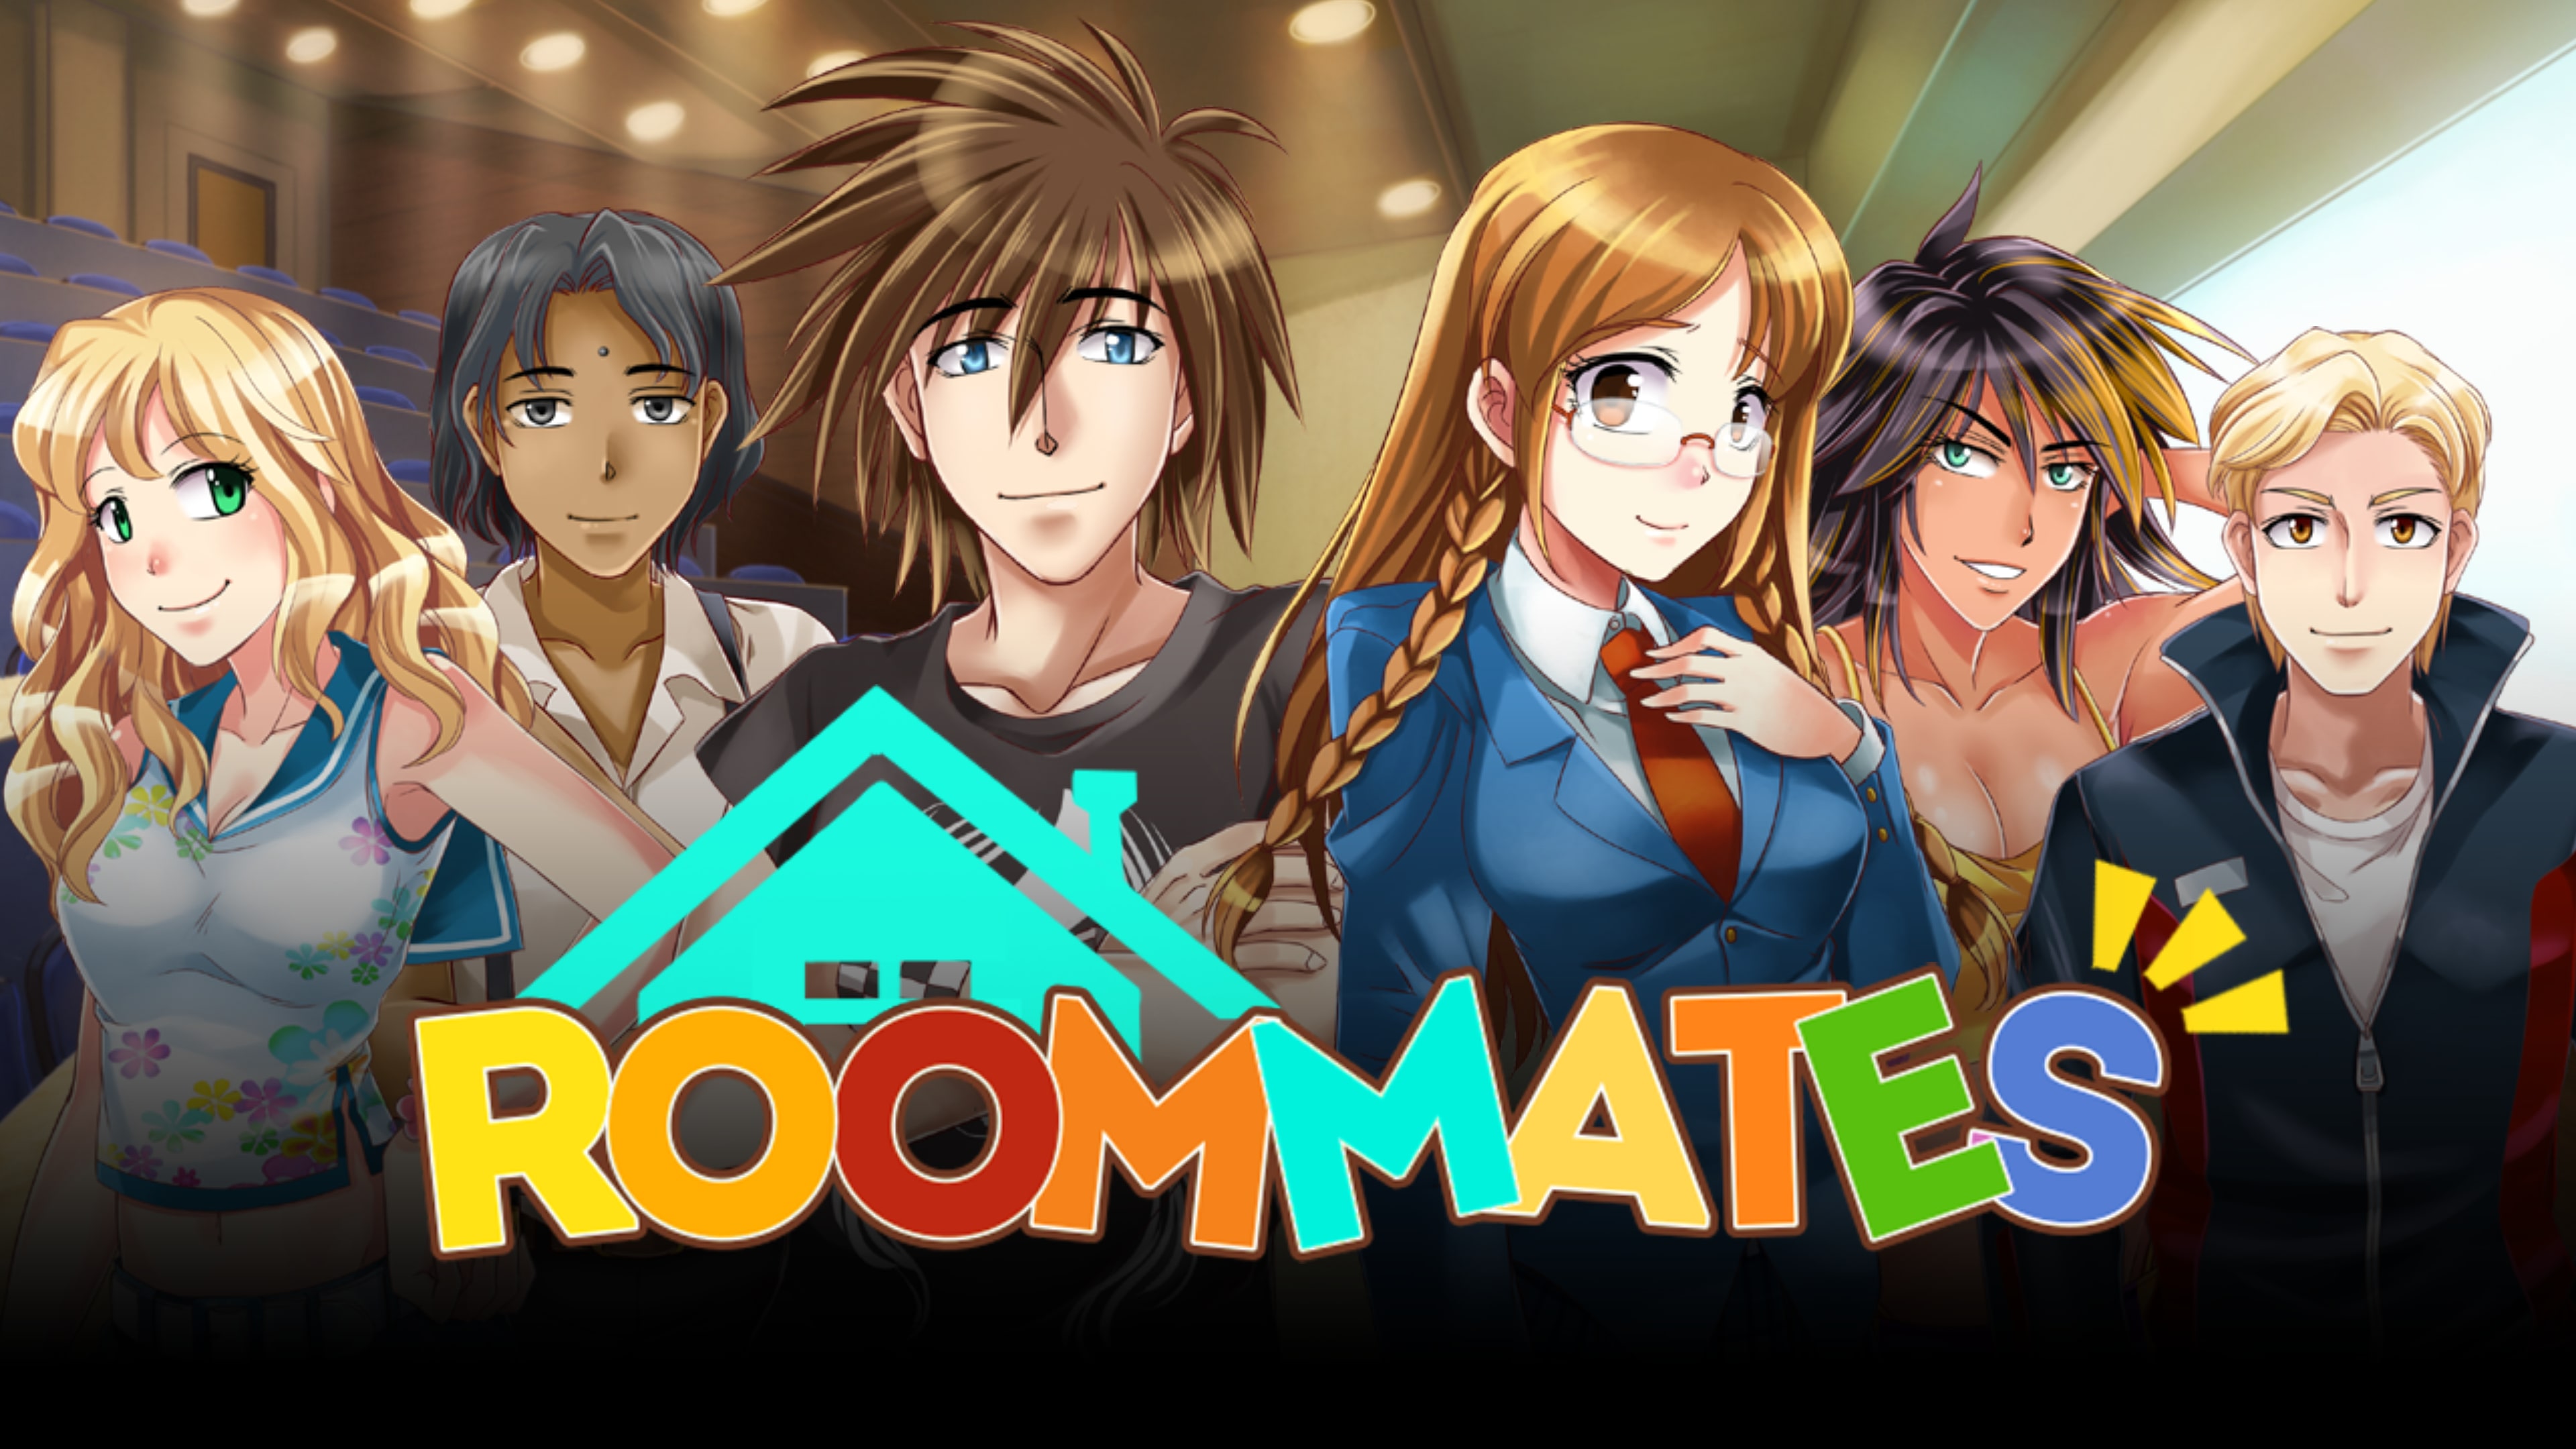 Roommates (English Ver.)